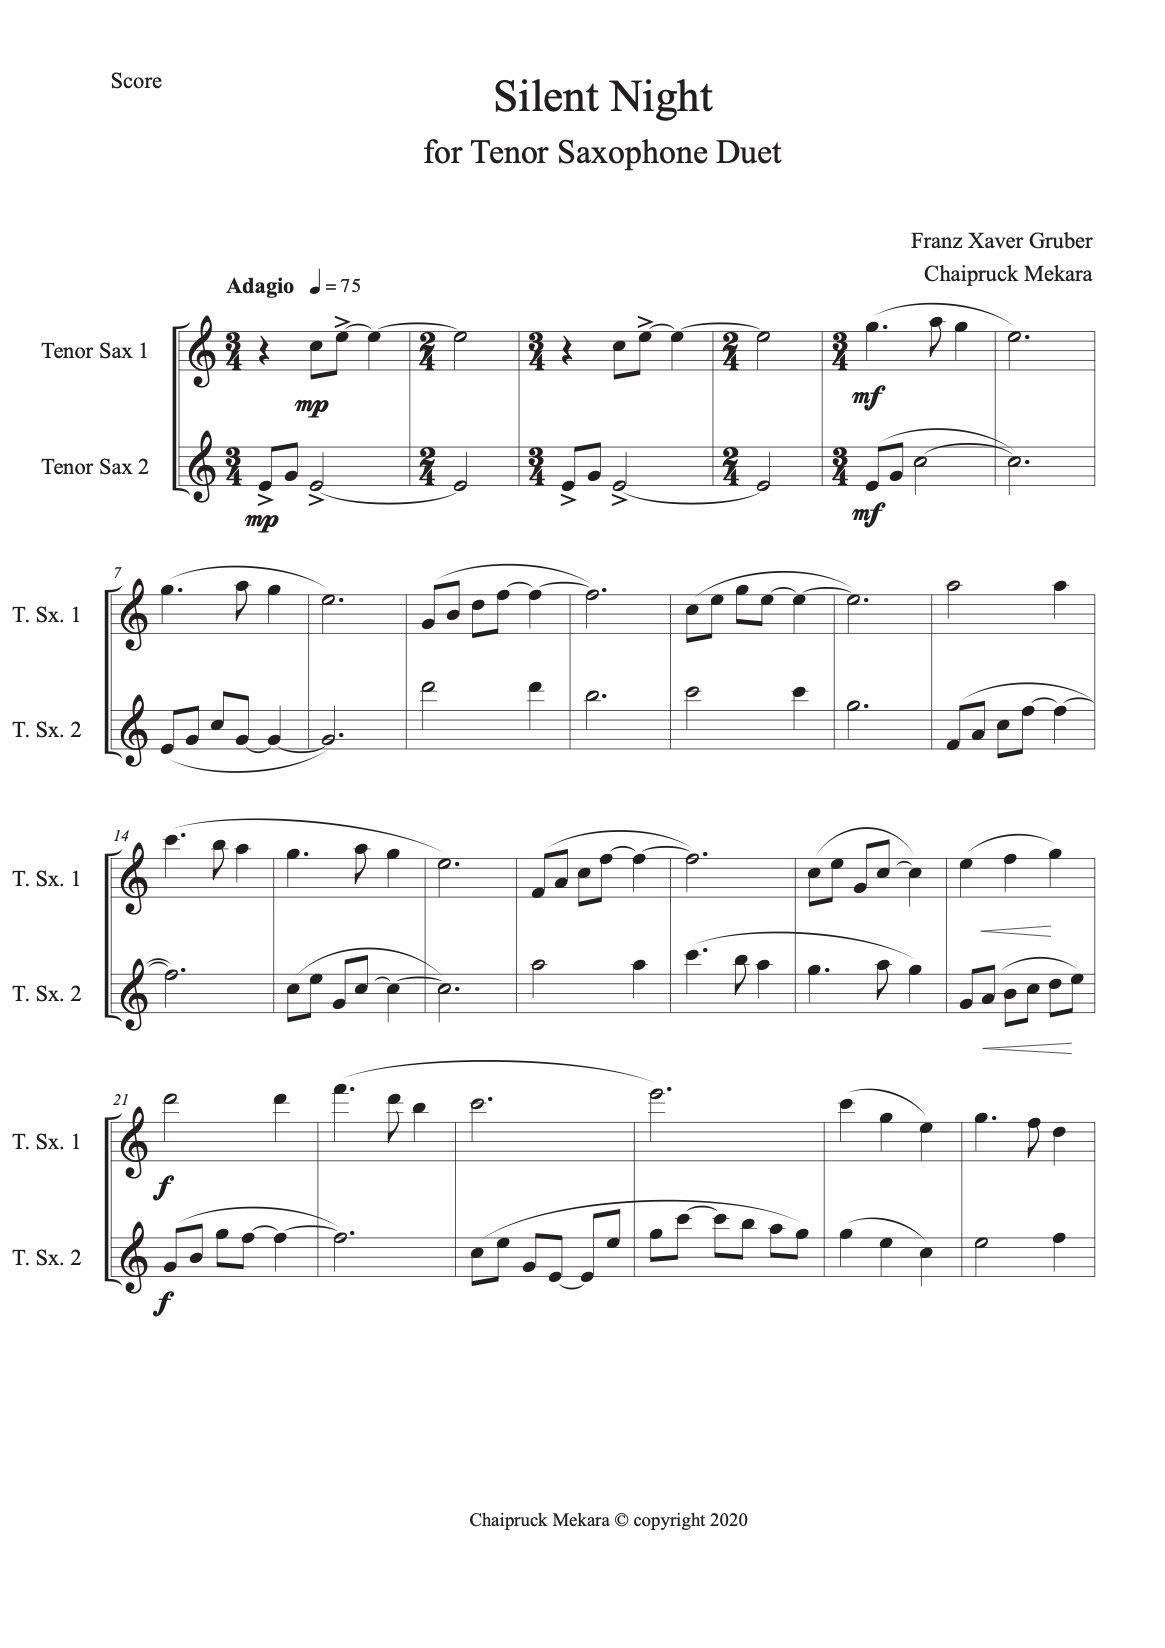 Tenor Saxophone Duet sheet music: Silent Night - ChaipruckMekara